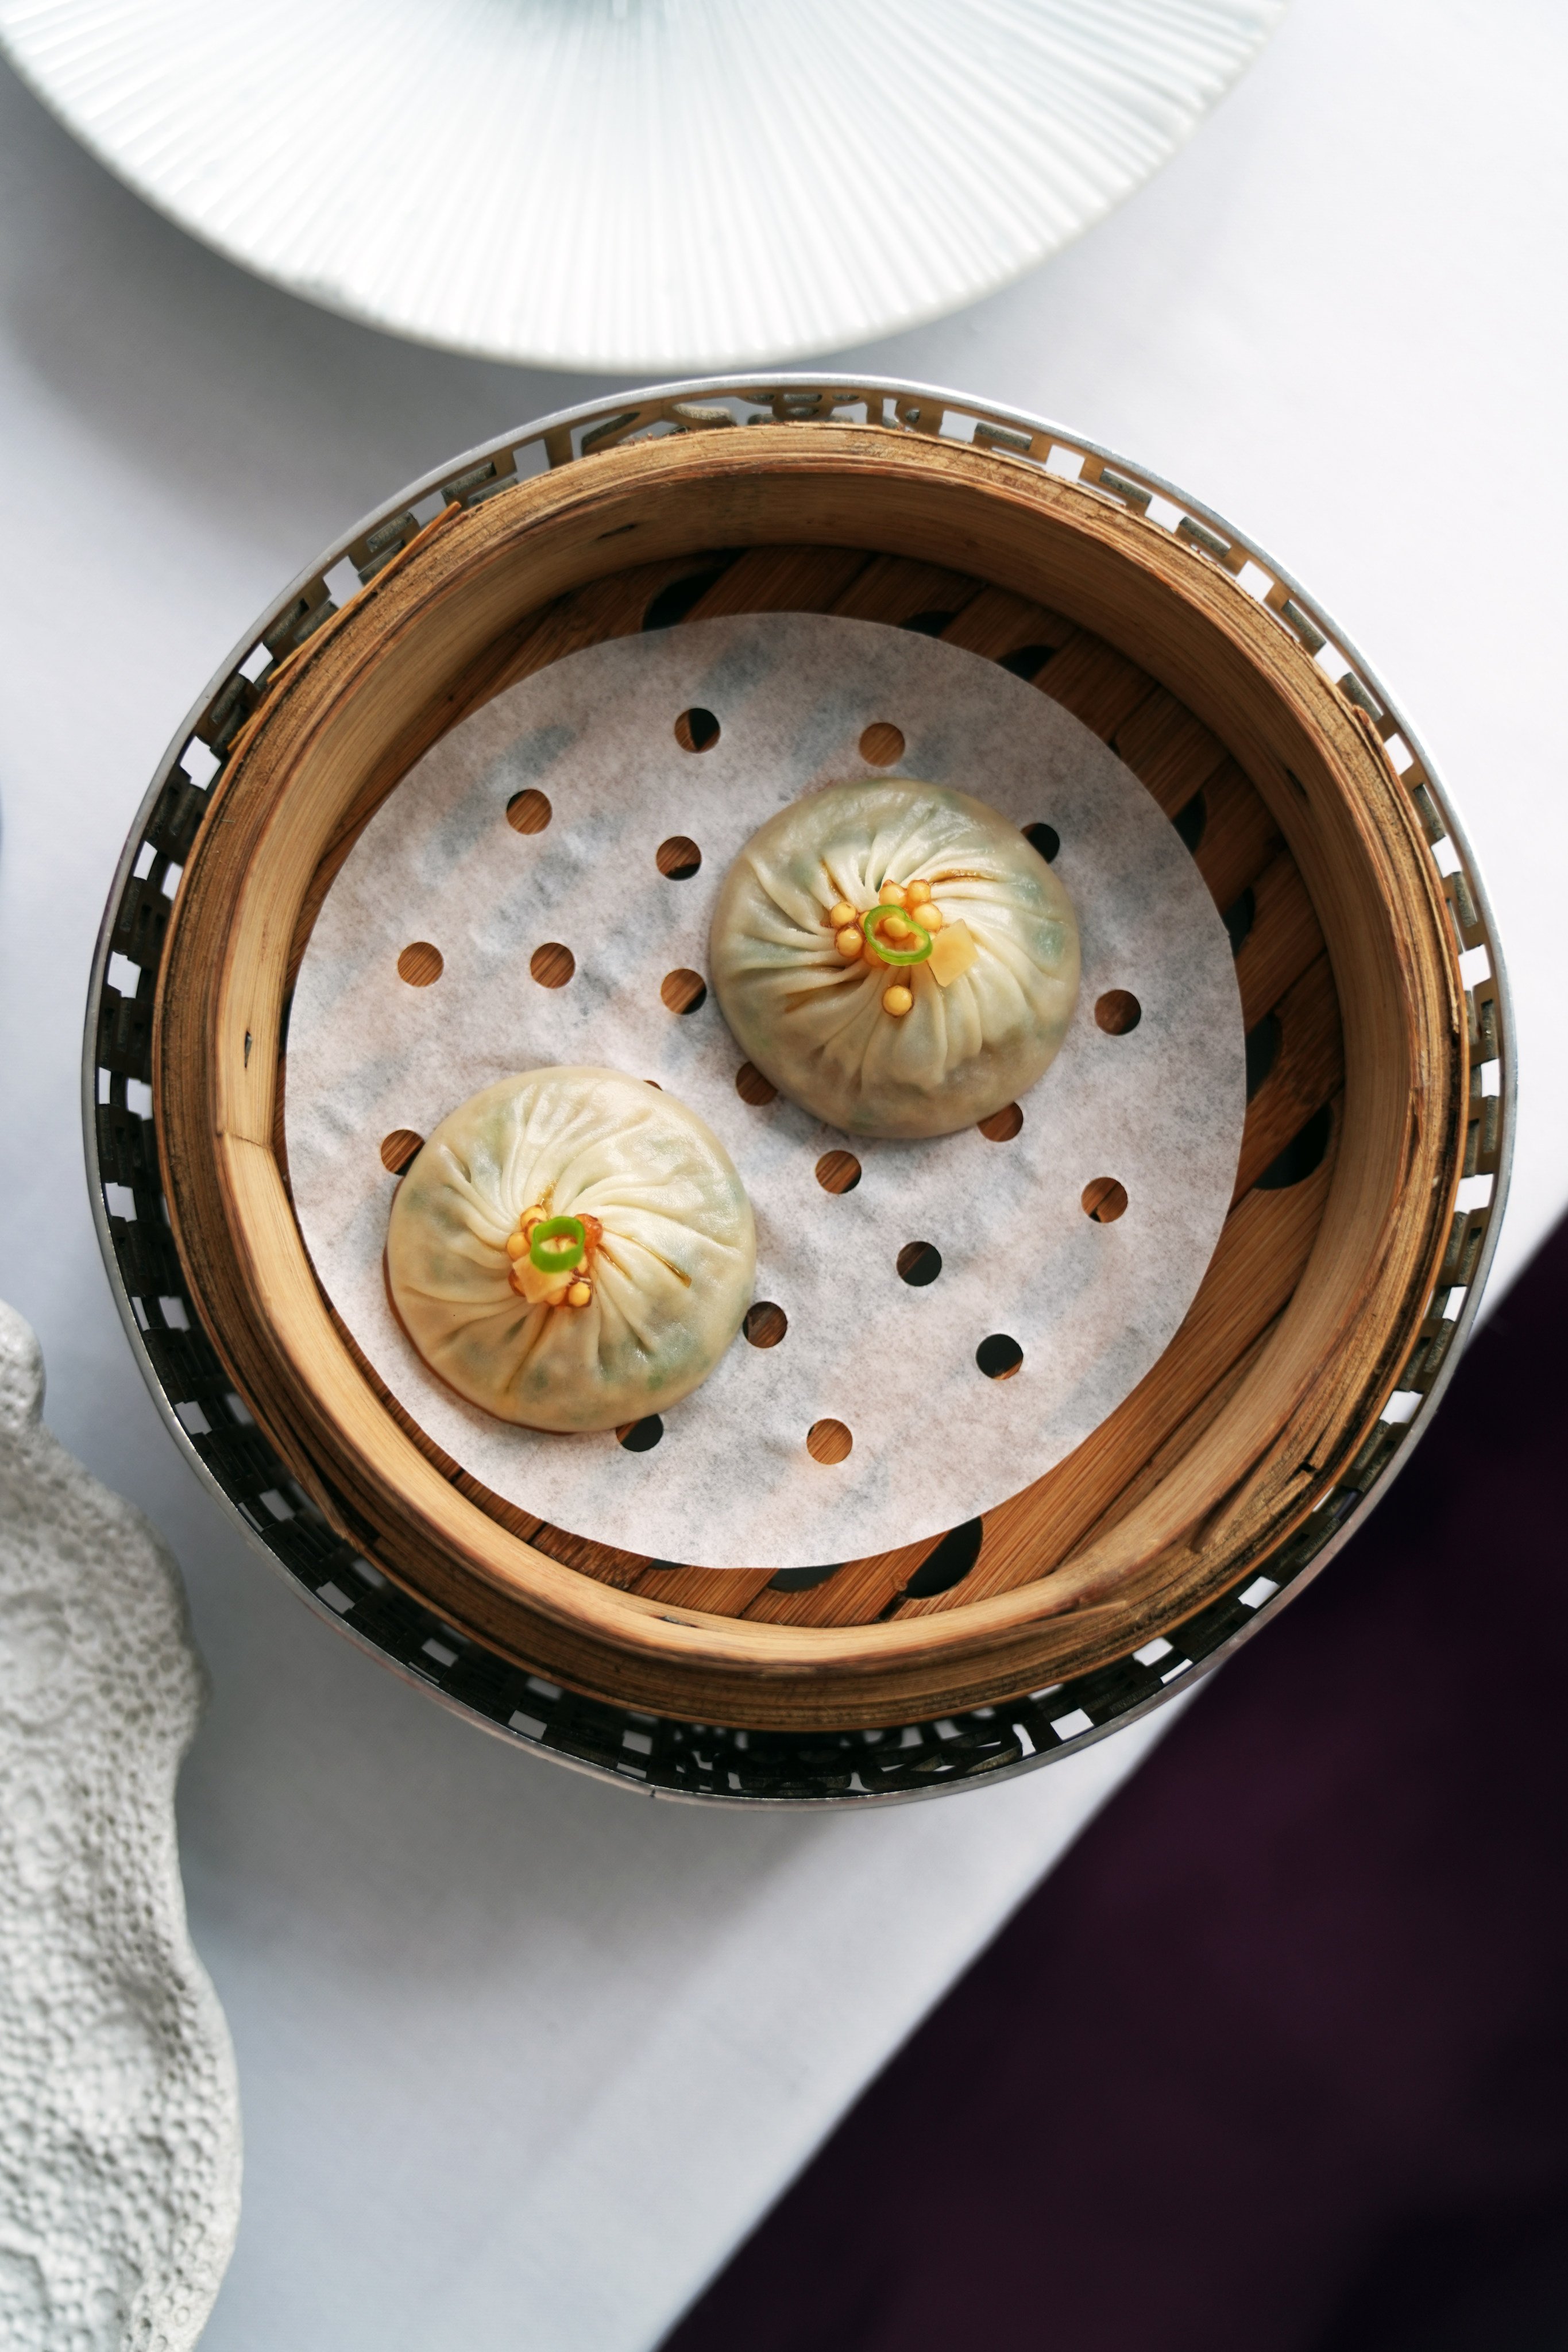 Iberian jamon Shanghai xiao long bao dumplings at the extraordinary four-hands dim sum dinner between Albert Adria and Andrew Wong. Photo: A.Wong x Albert Adria